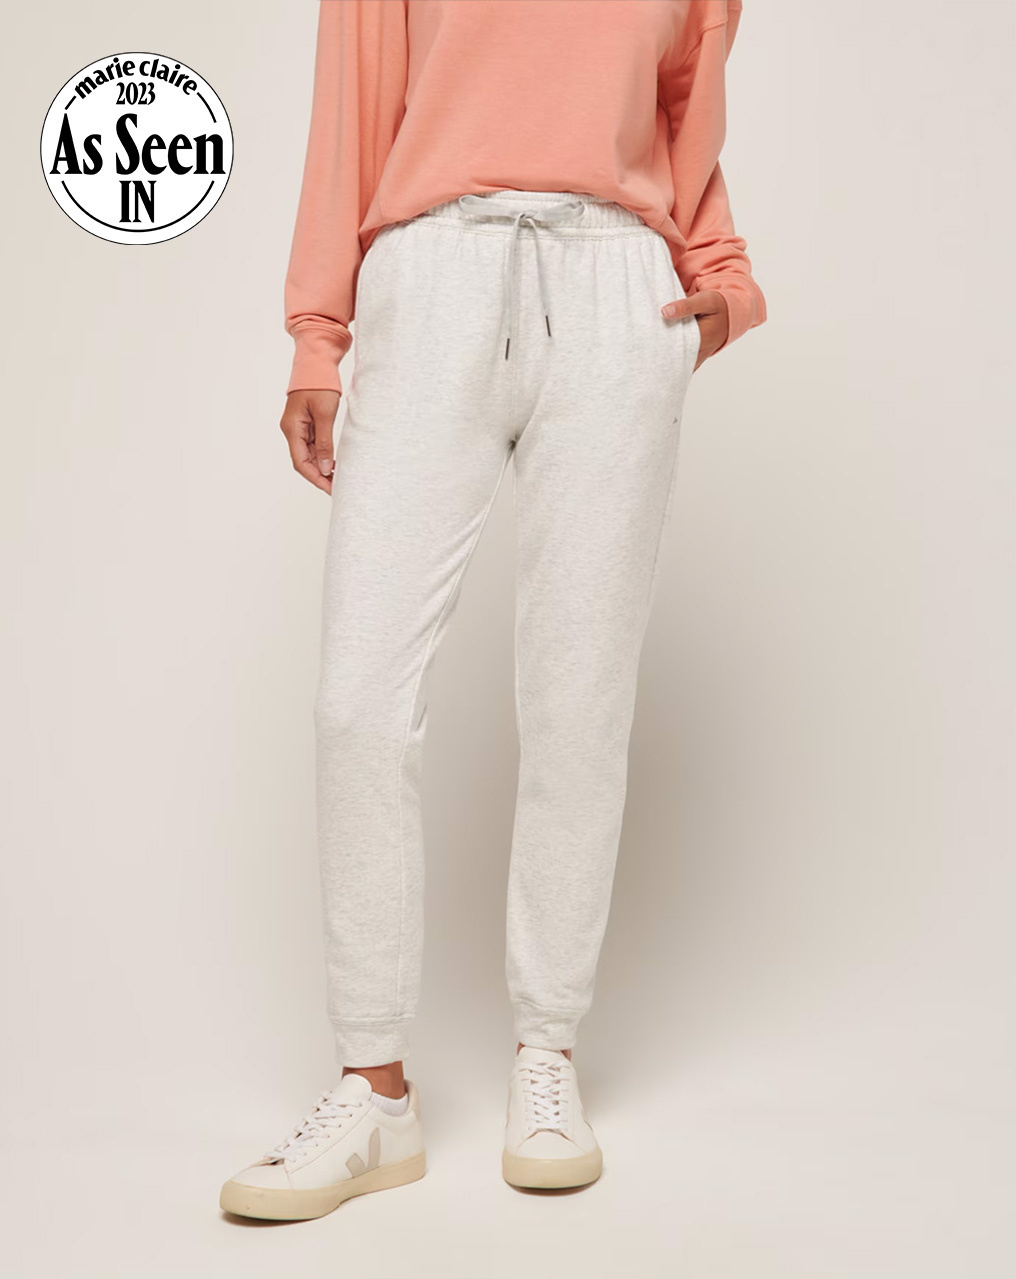 Womens Casual Loungewear Knot Side Tee Shirt & Pants Set